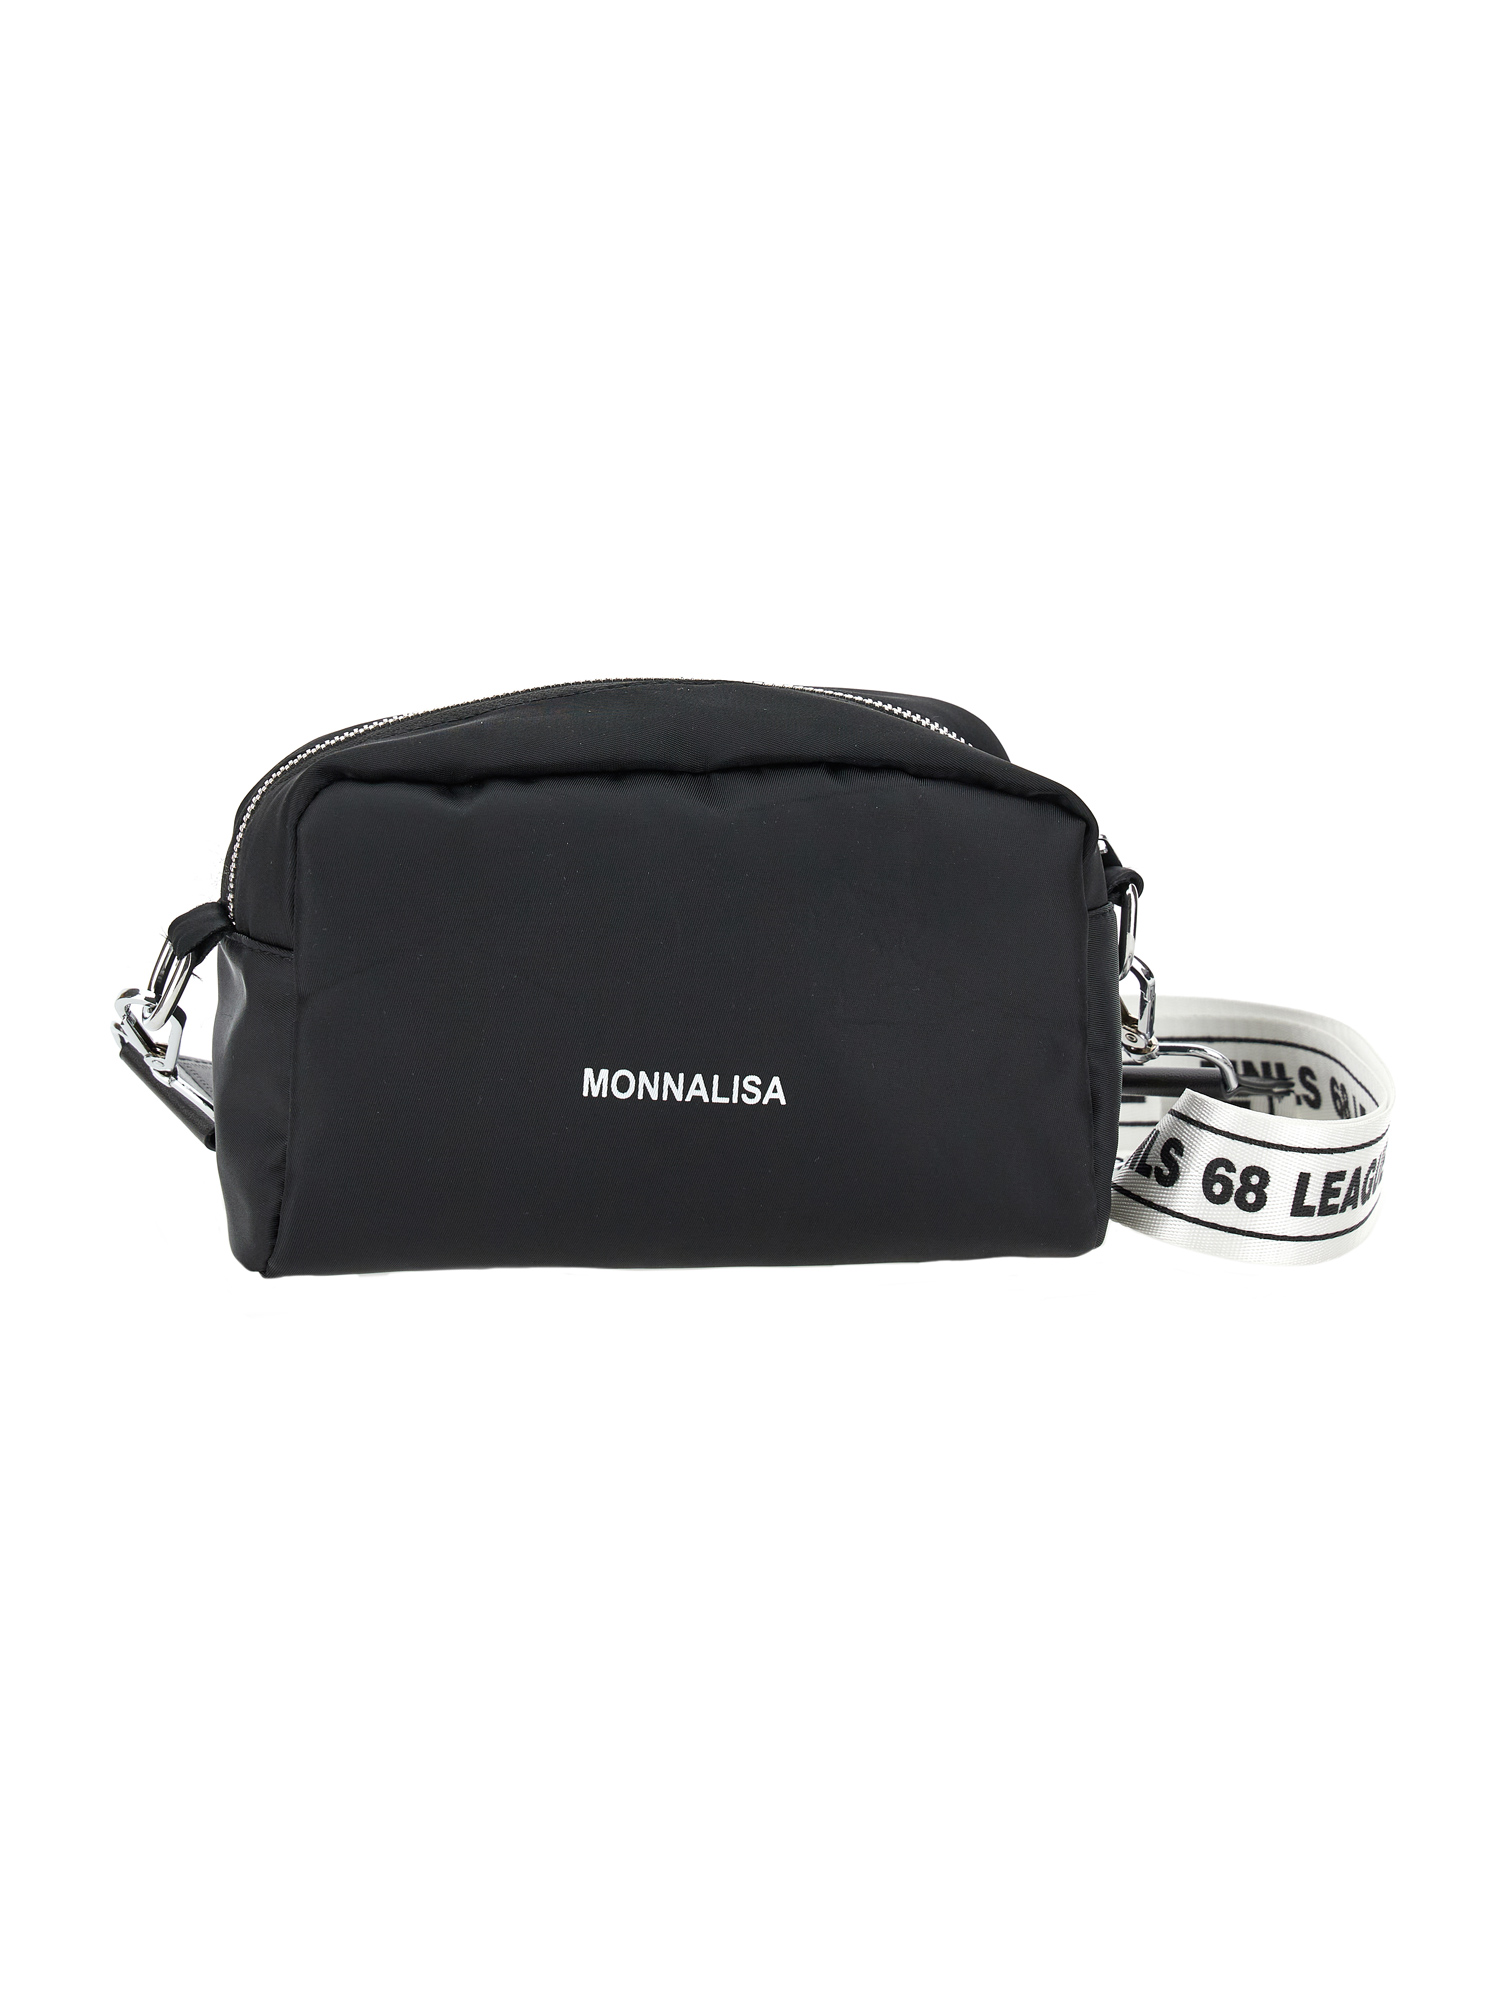 Monnalisa Technical Fabric Shoulder Bag In Black